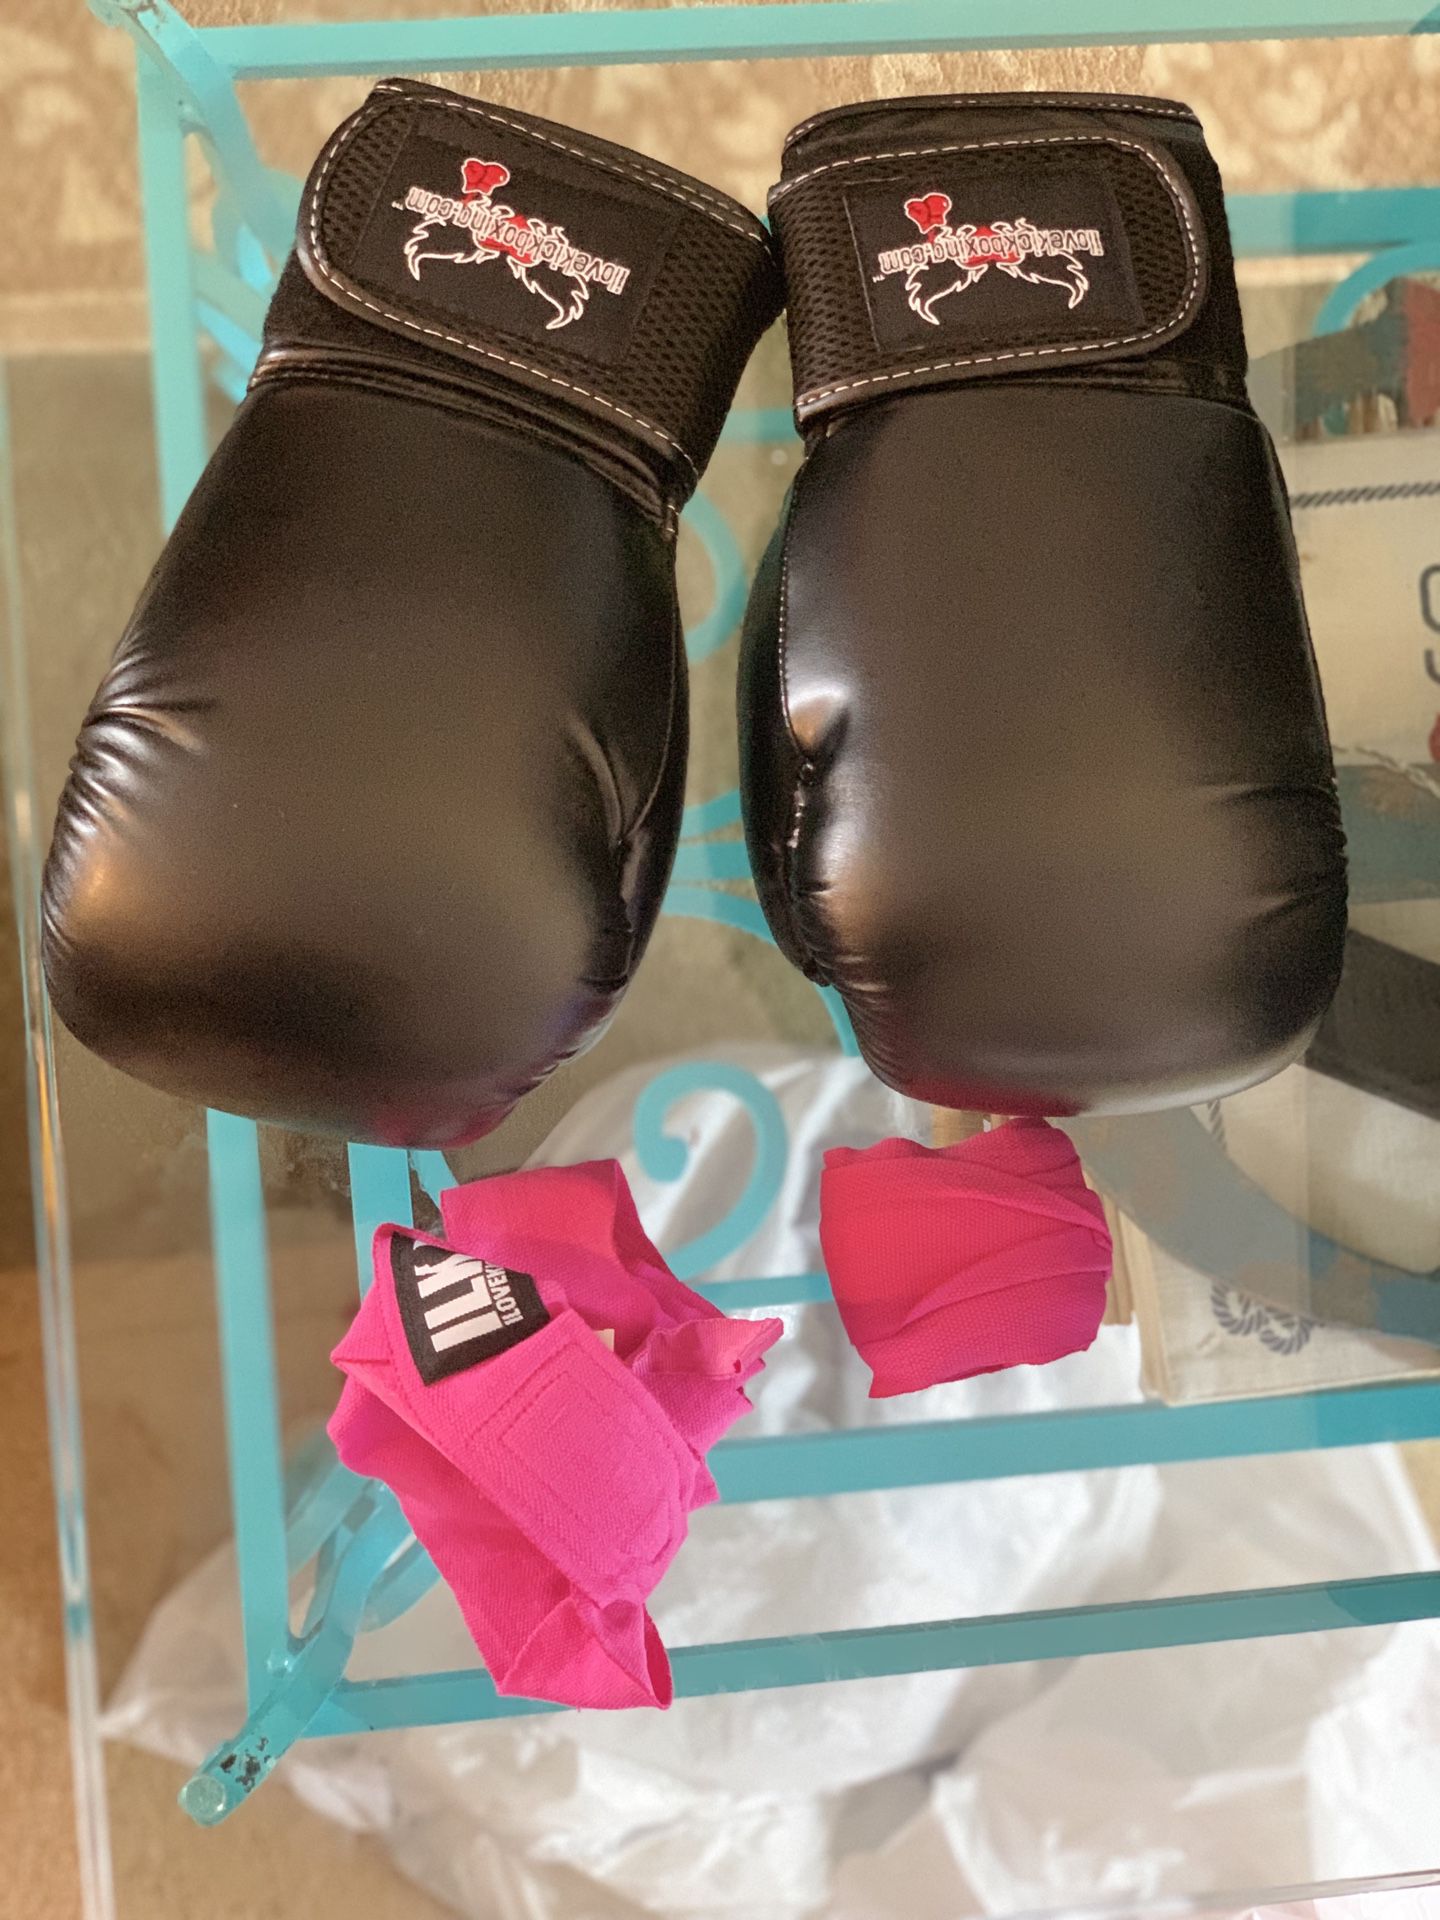 ILK boxing gloves